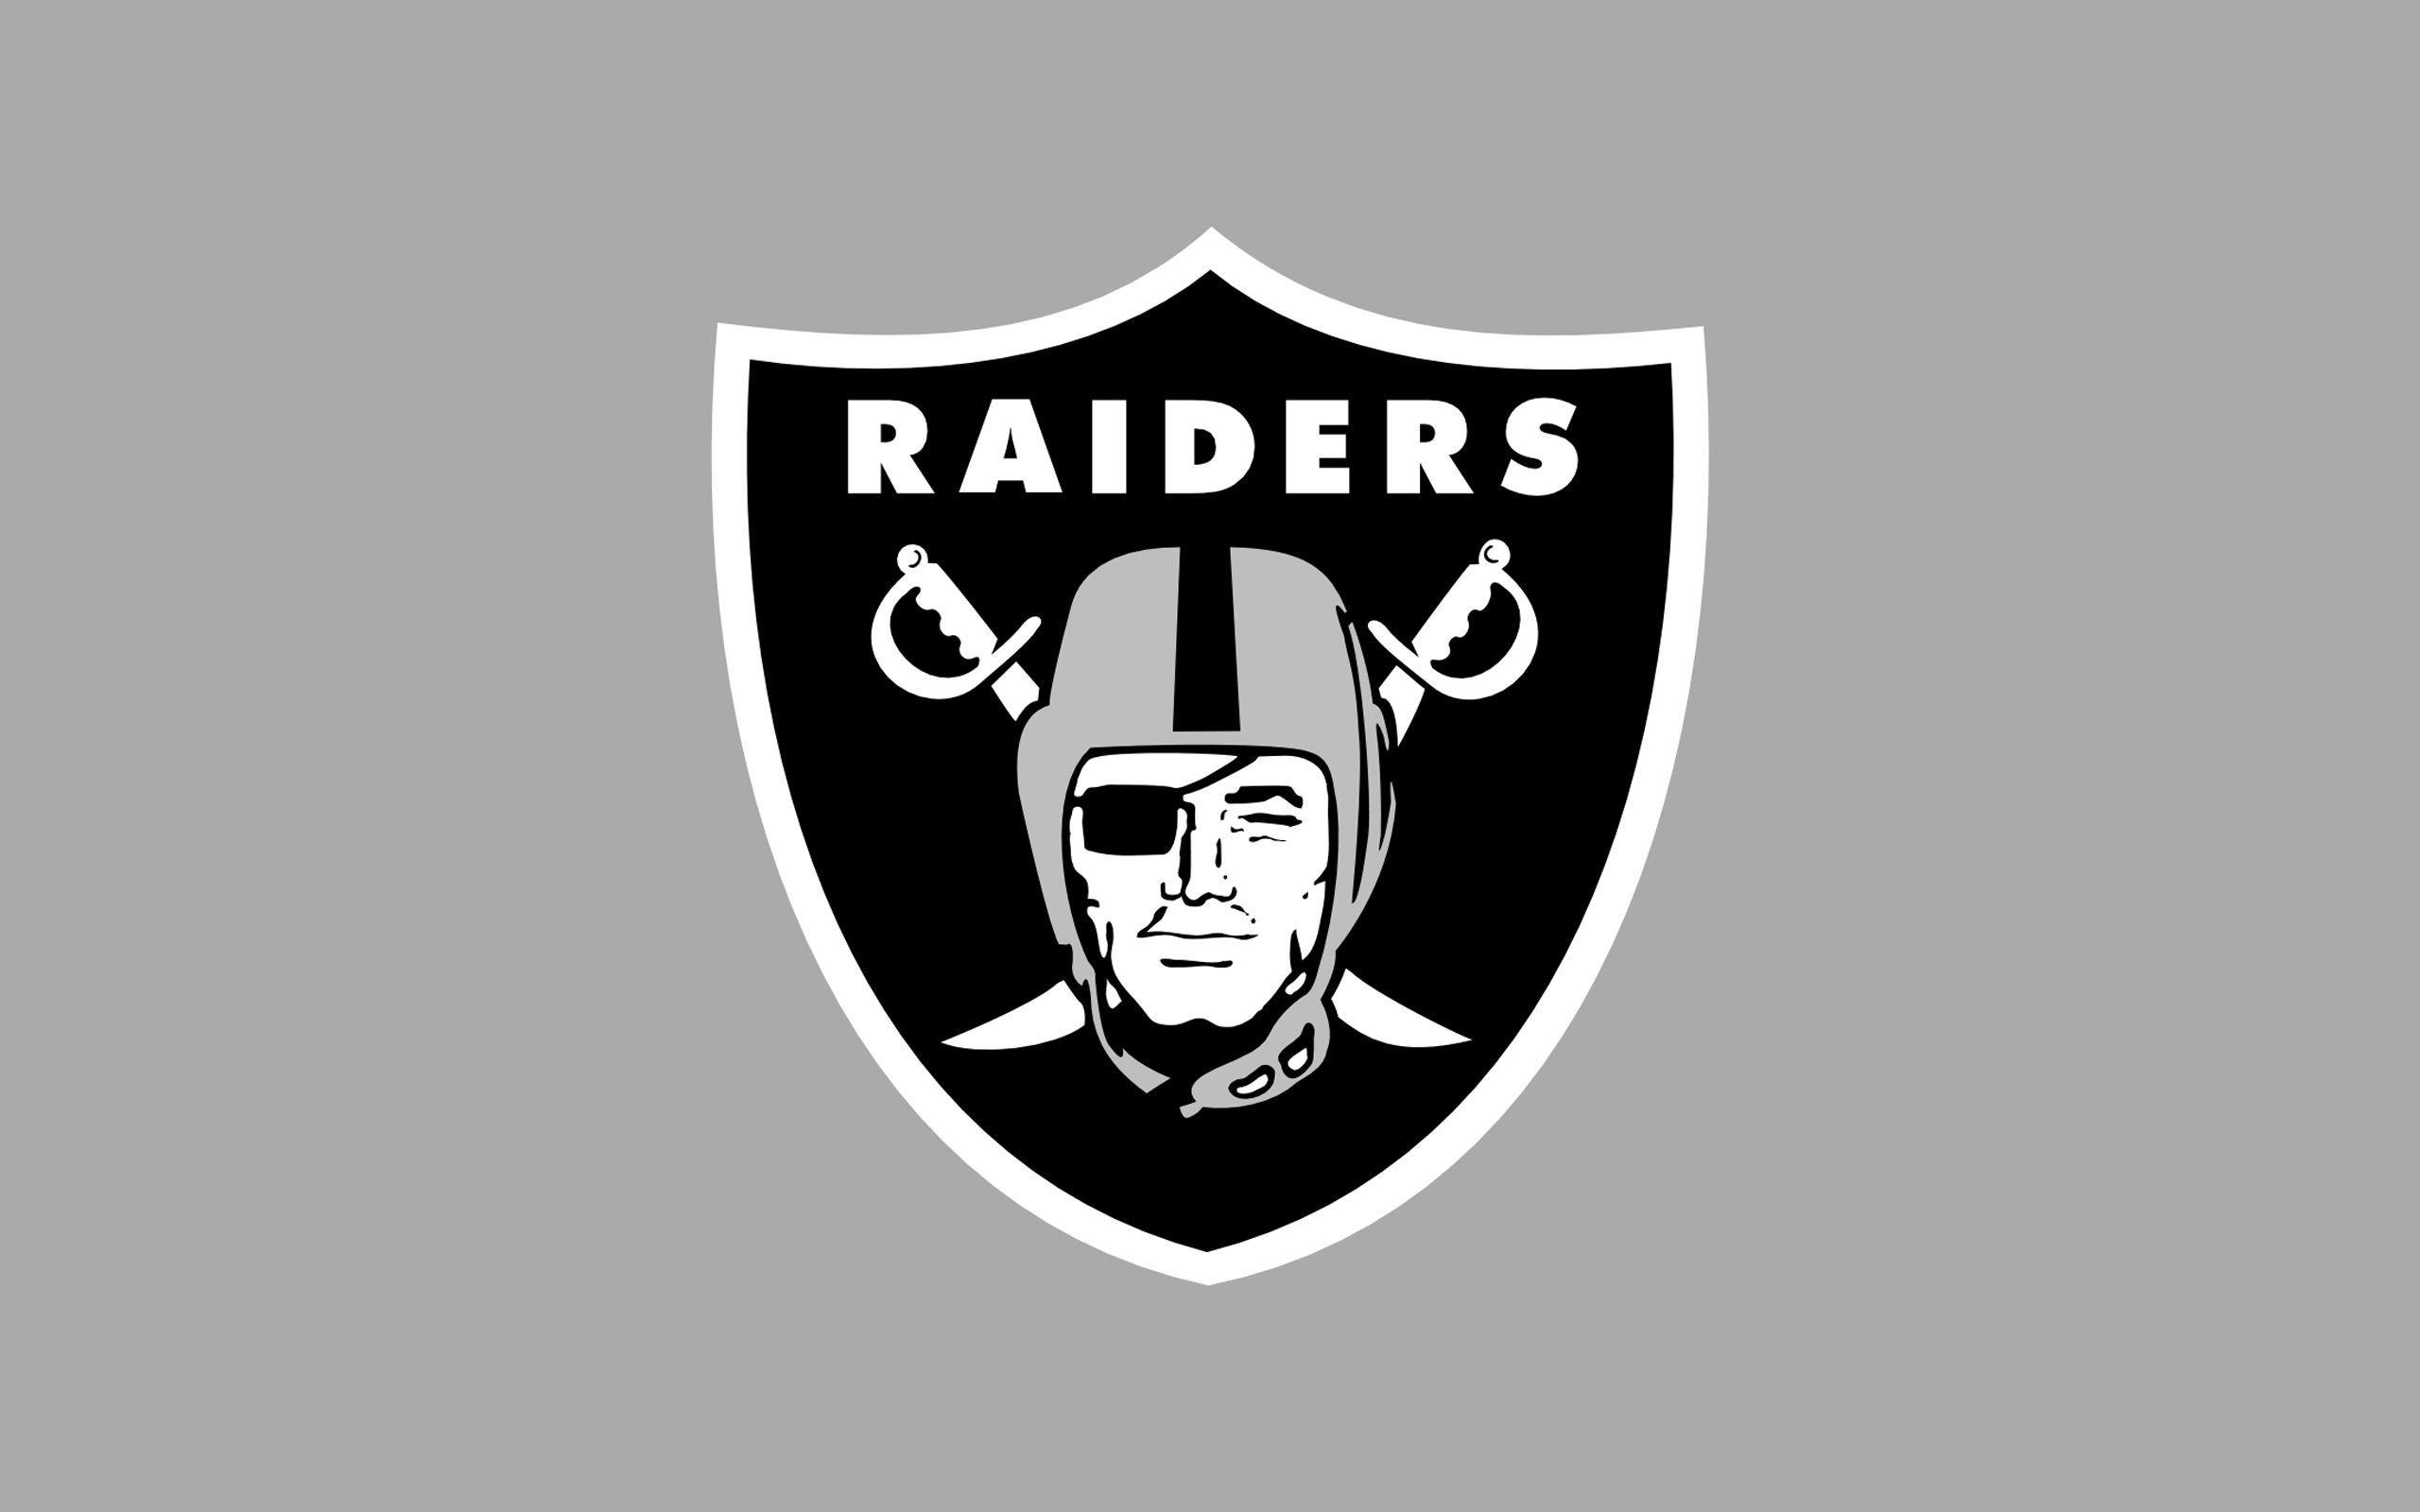 best ideas about Raiders wallpaper Image raider